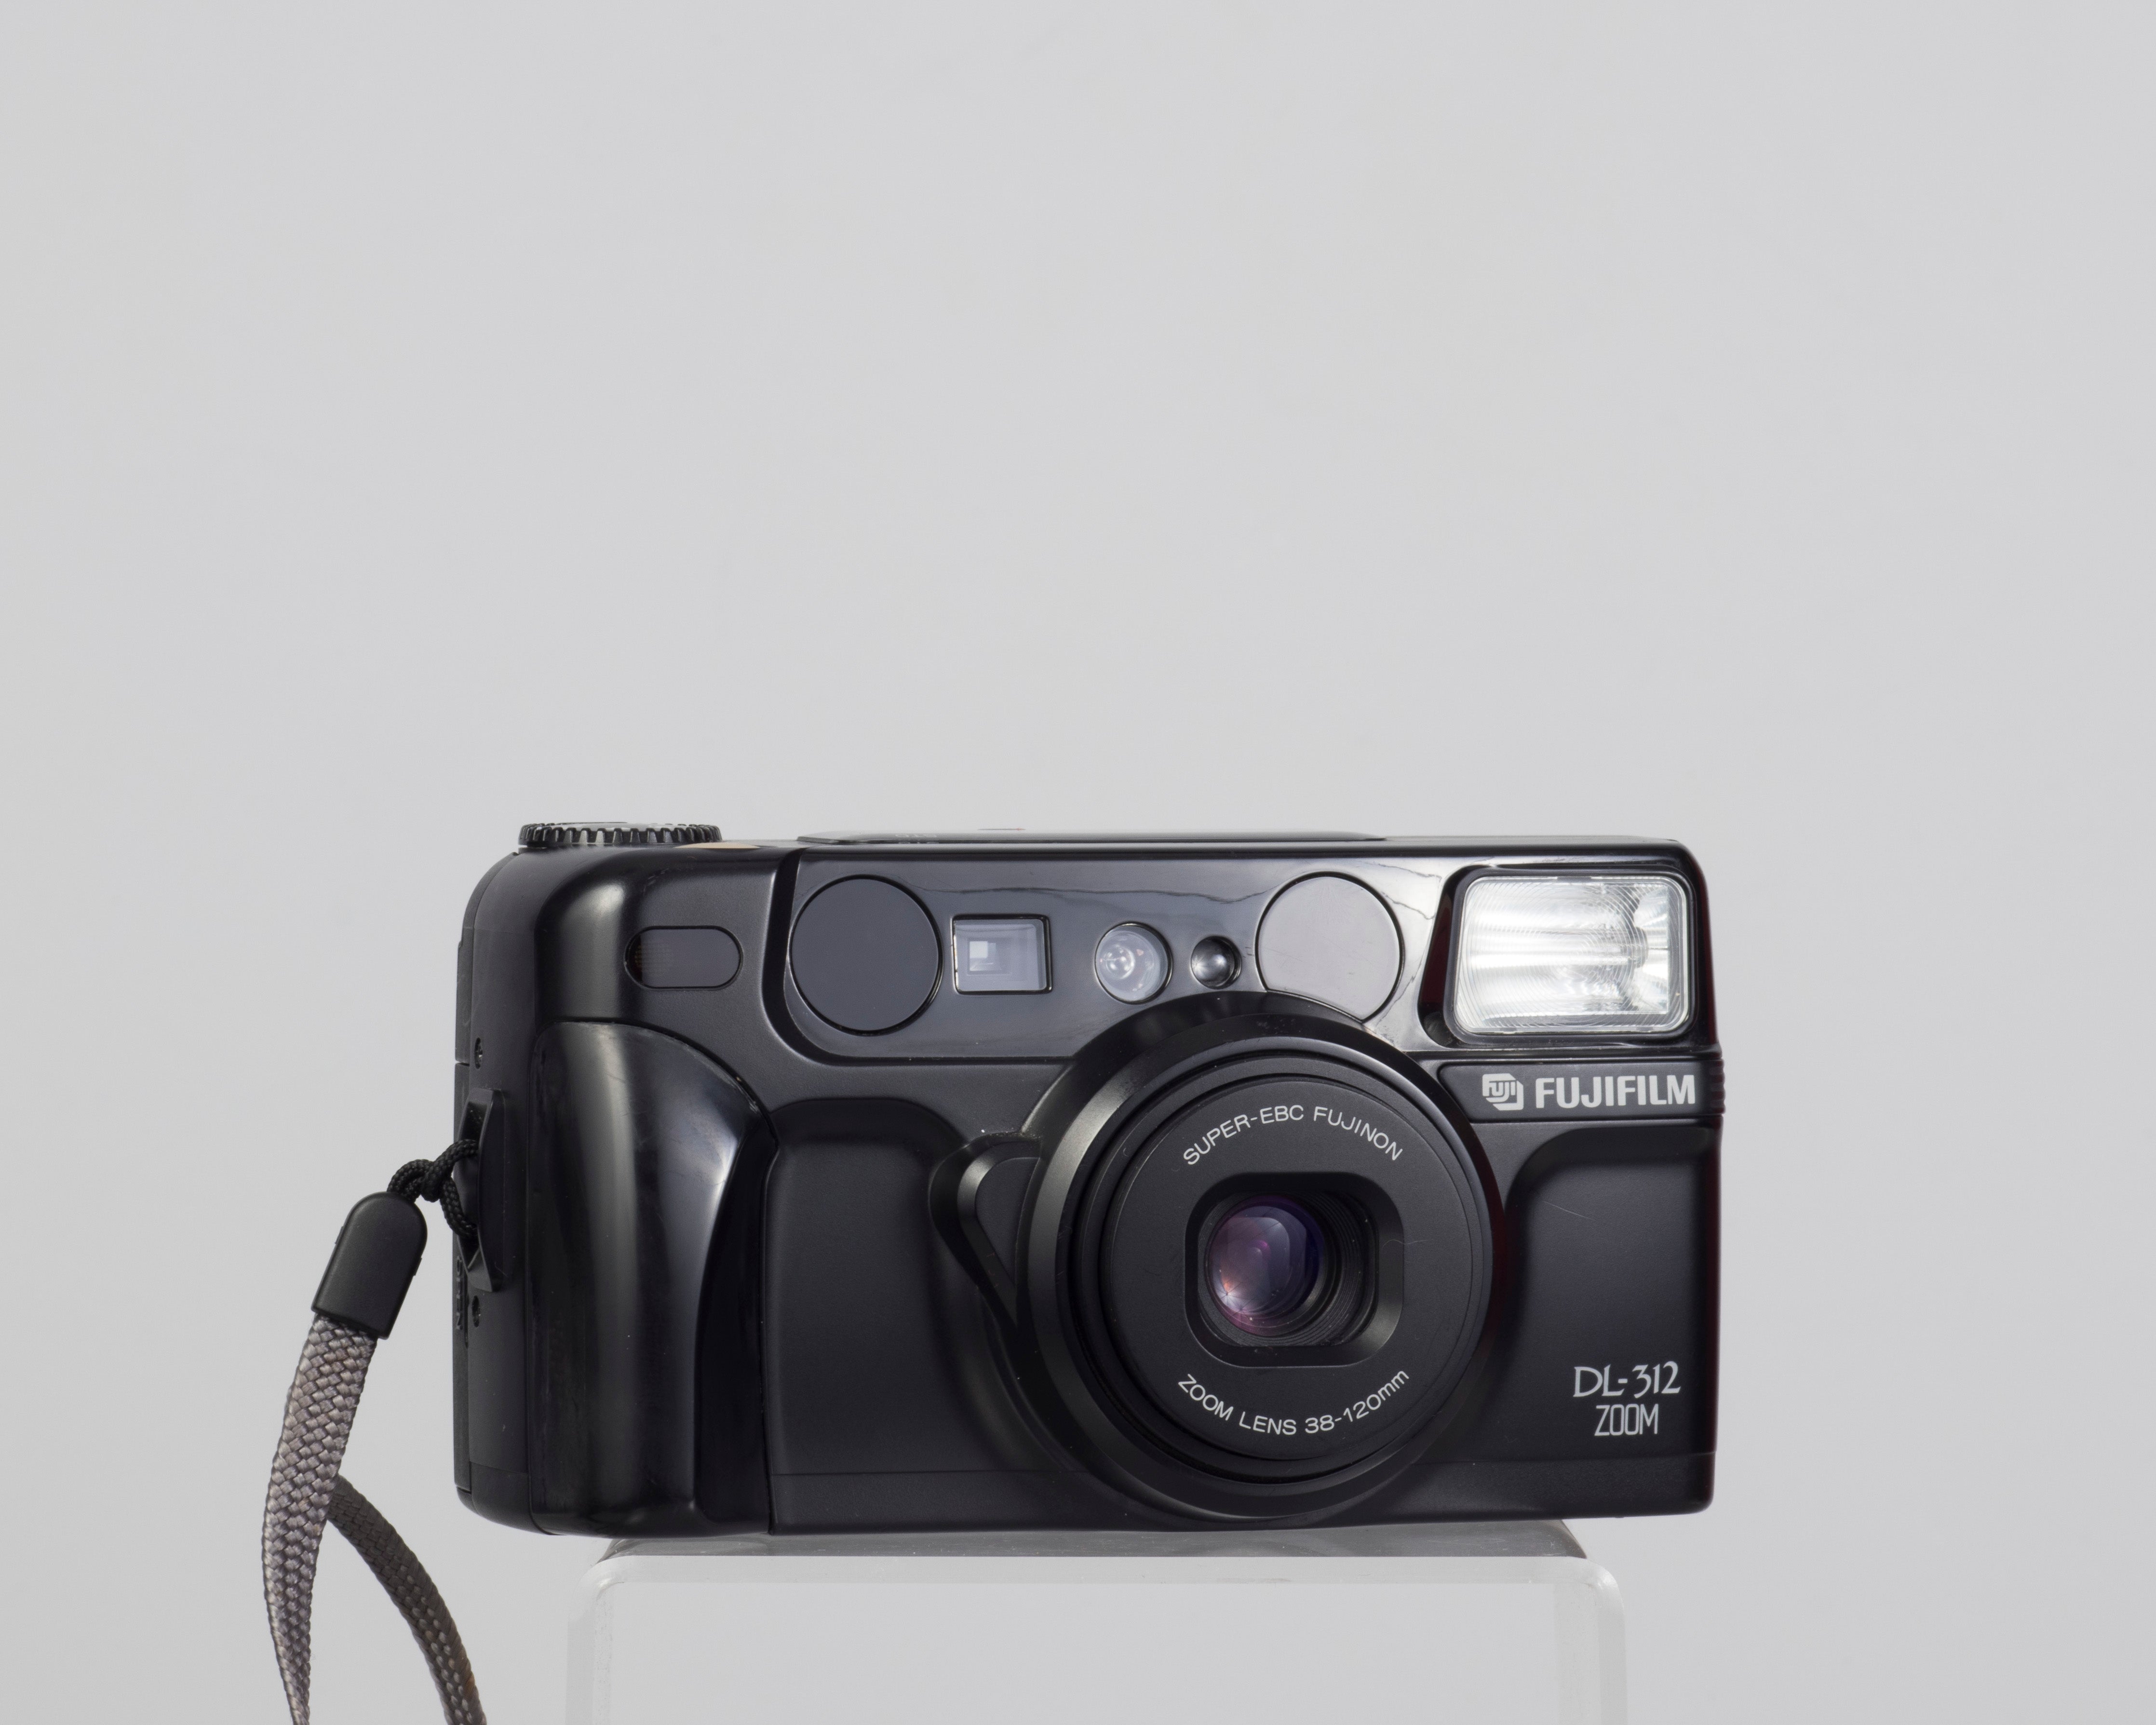 Fujifilm DL-312 Zoom 35mm camera w/ manual (serial 91122942